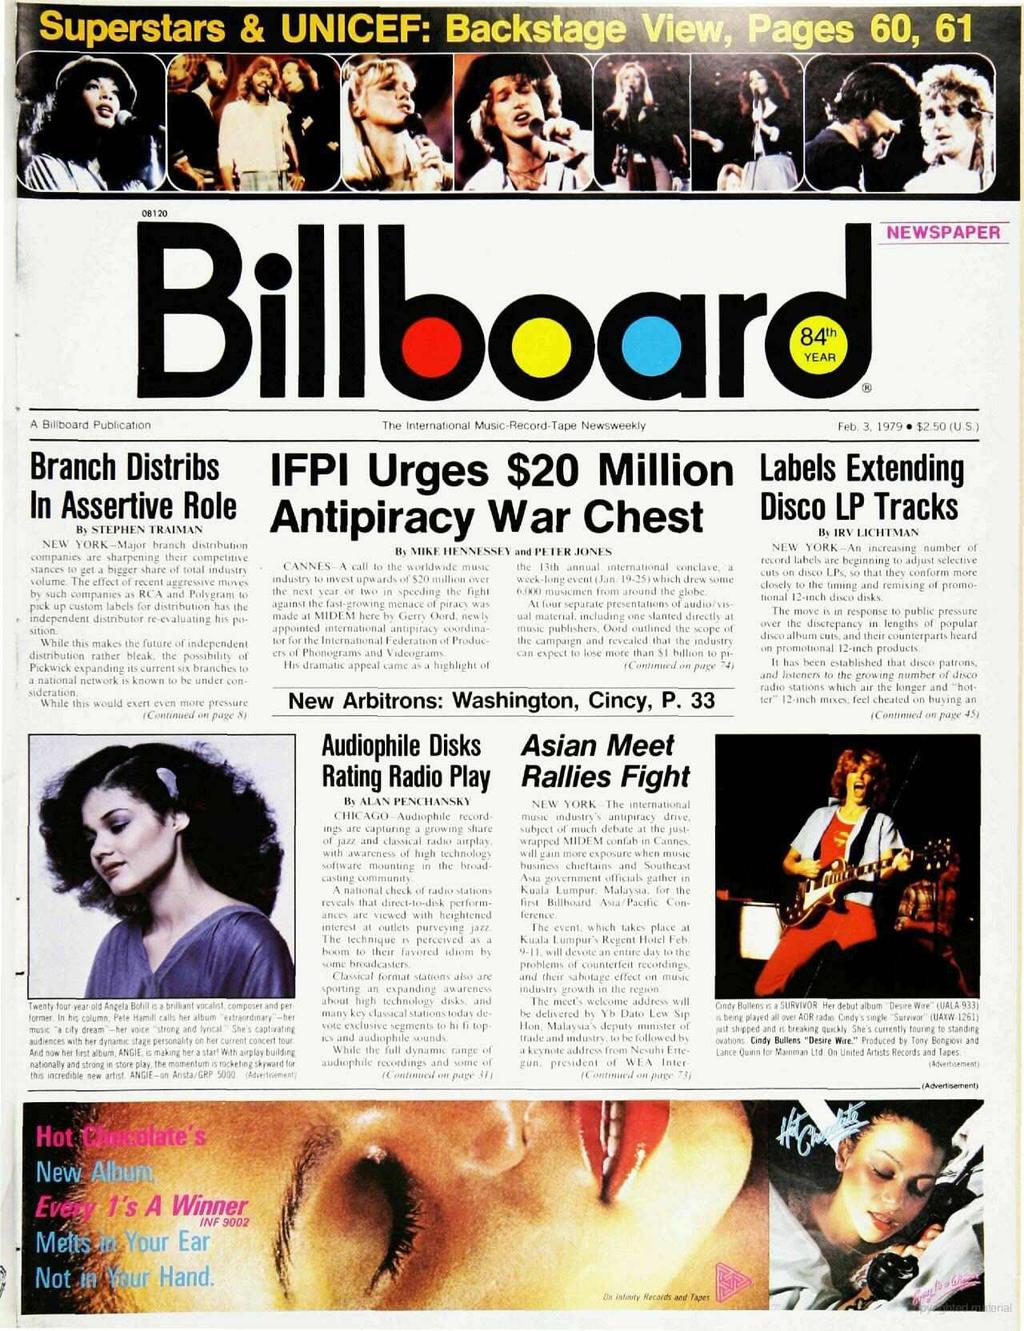 NEWSPAPER Biliboar A Billboard Publication The nternational Music -Record -Tape Newsweekly Feb. 3. 1979 $2.50 (U. S.) r Branch Distribs n Assertive Role \. sr By 3TEP1E\ 1551 \1 s\ YORK- MM.n,'.r..:raga,,harper gi their, m.